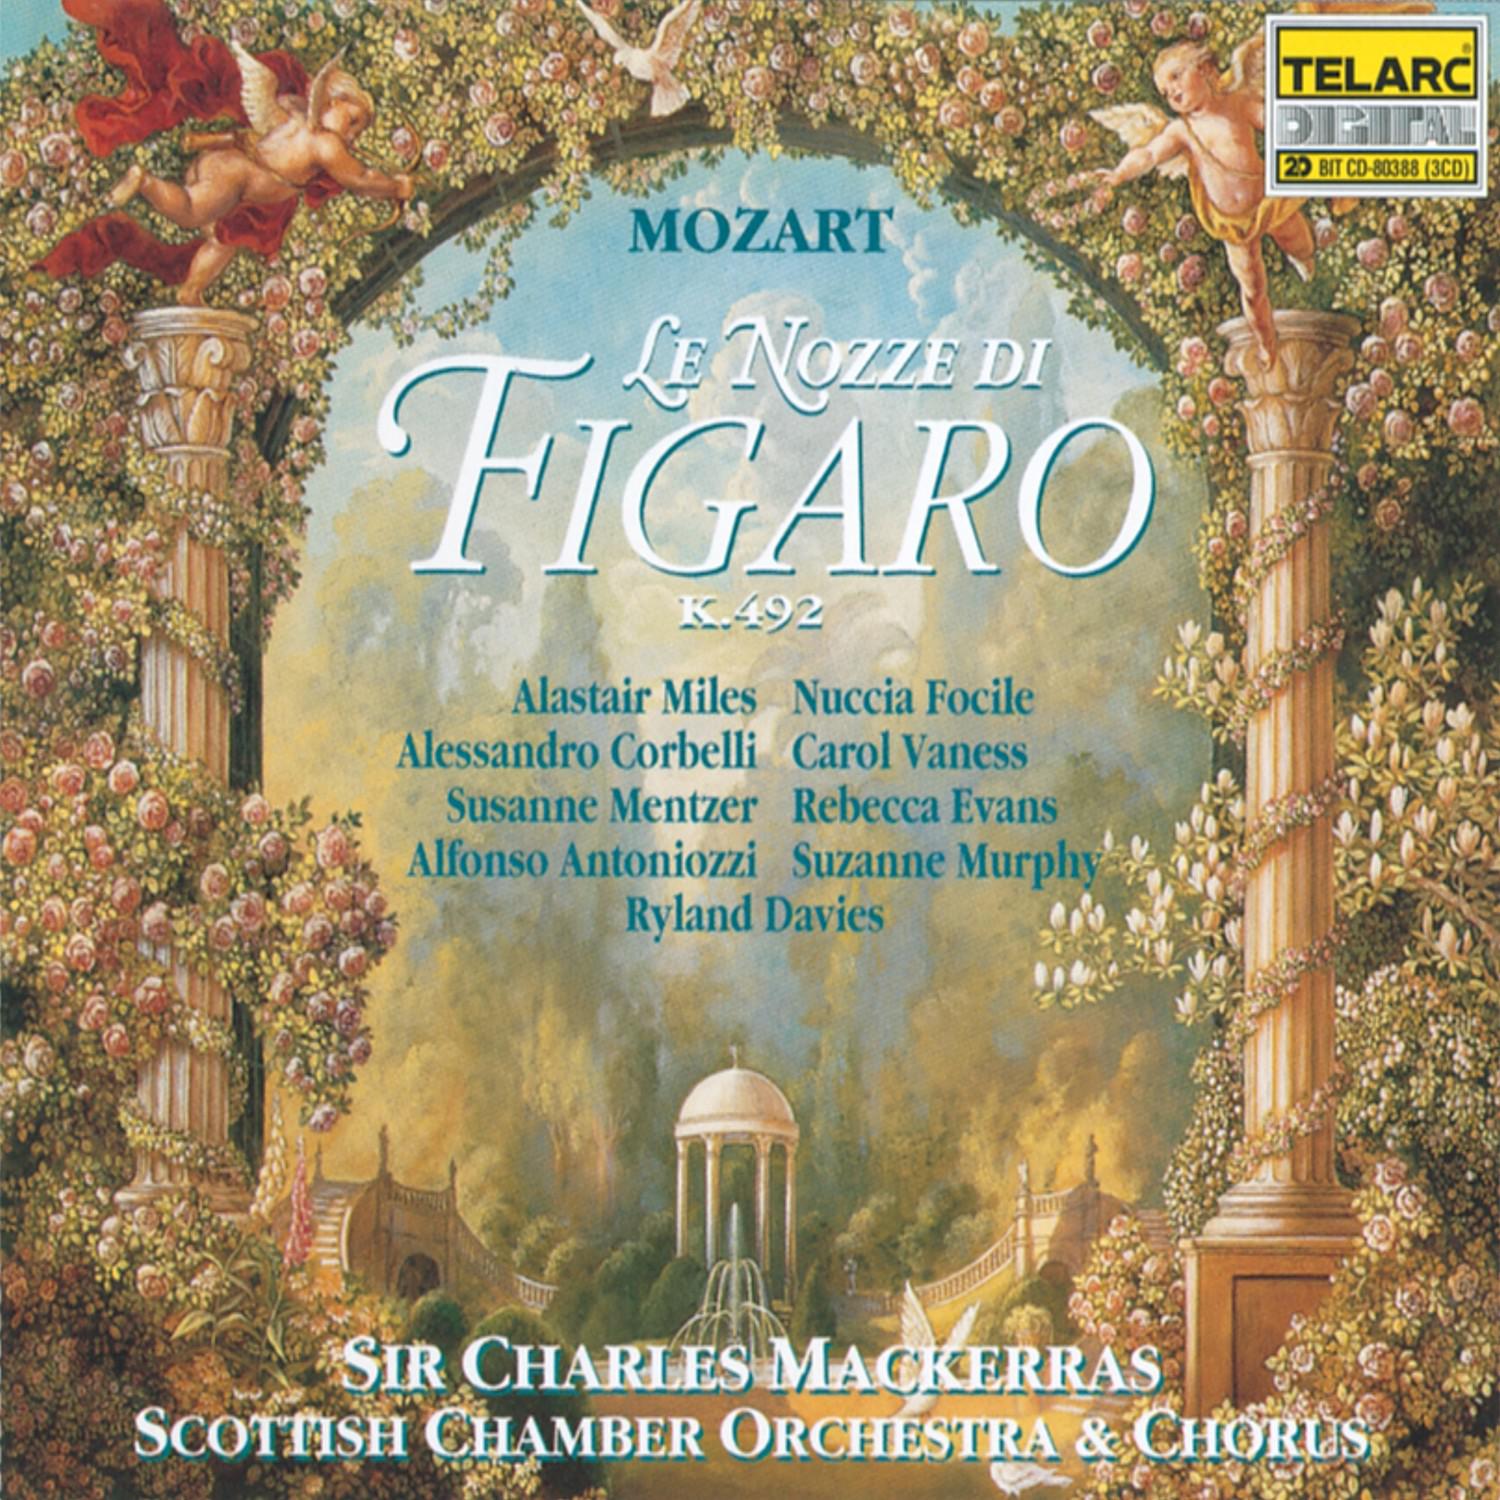 Marriage of Figaro: Recitativo: "Io vi dico, signor"